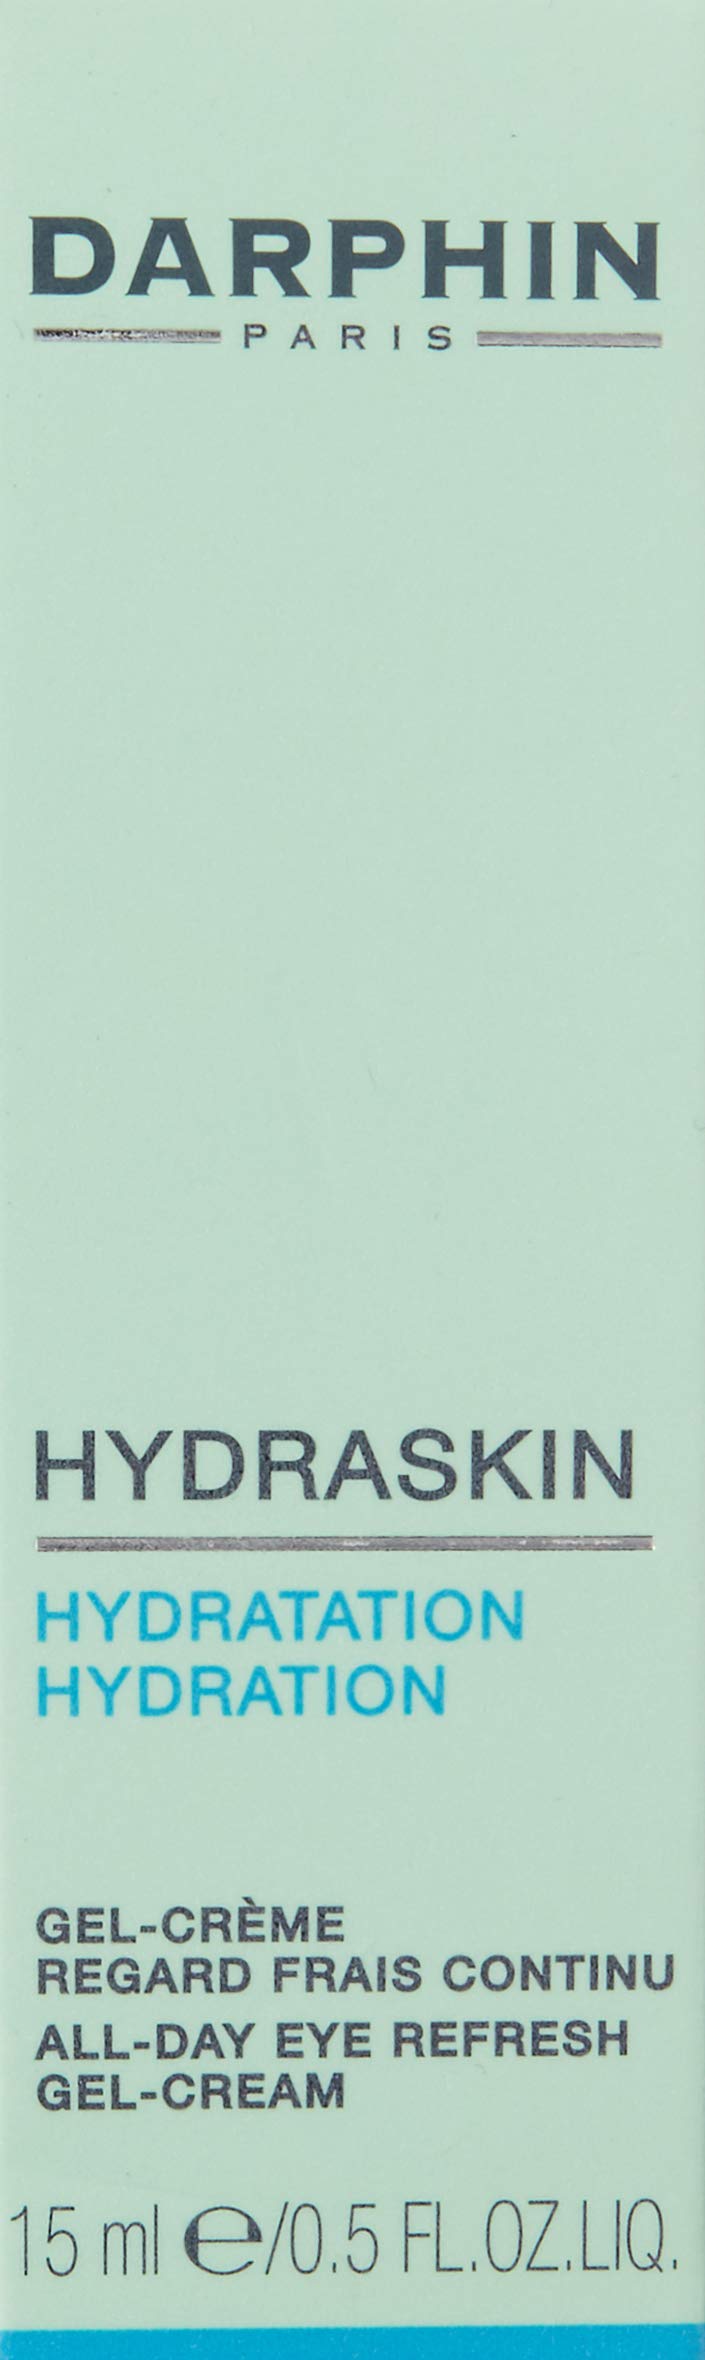 [Australia] - Darphin Darphin Hydraskin All-Day Eye Refresh Gel-Cream, 0.5 Ounce 